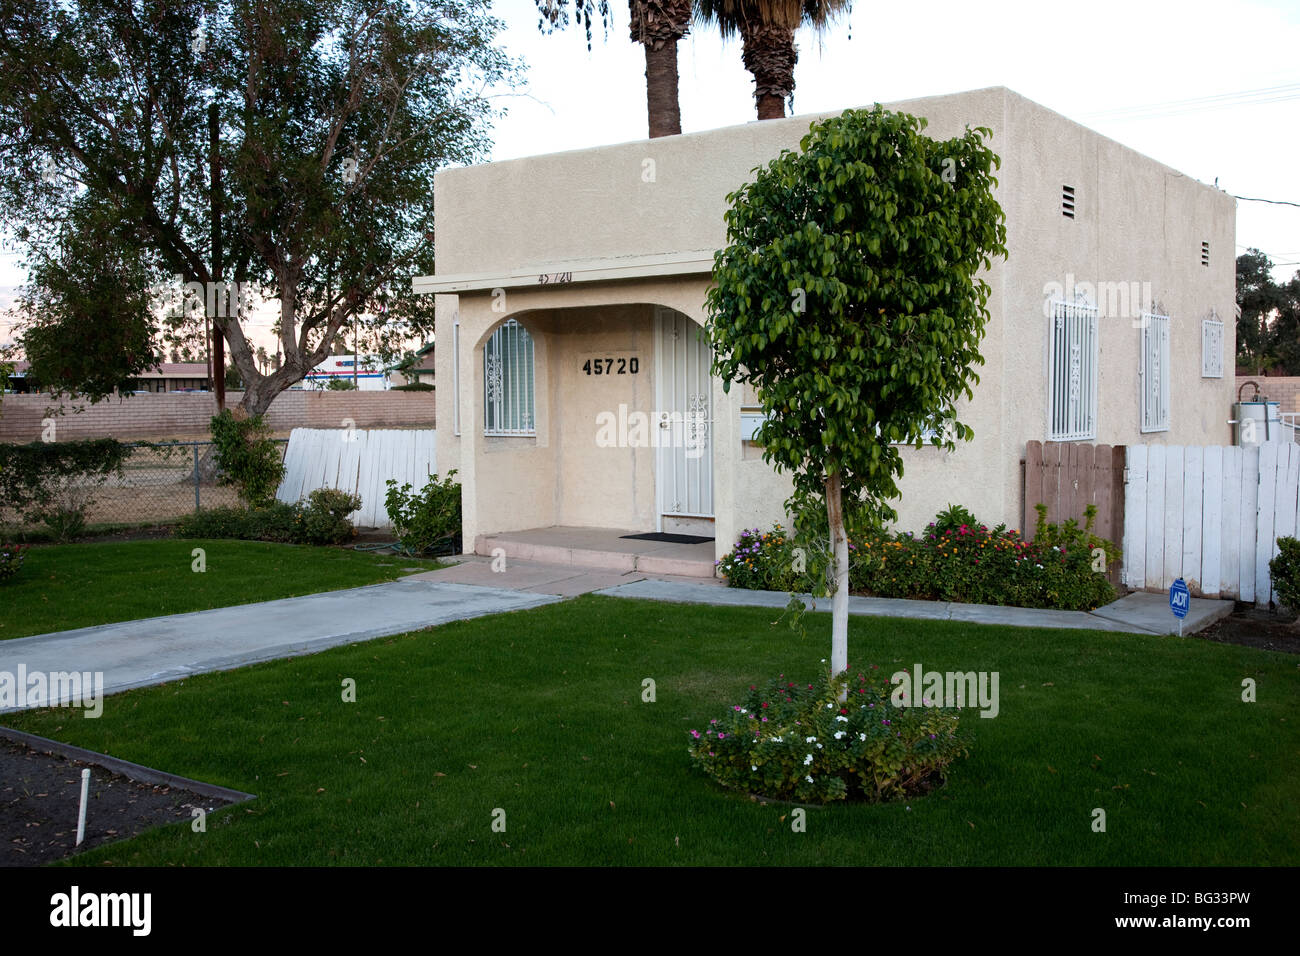 Single family residence, Indio, California Stock Photo